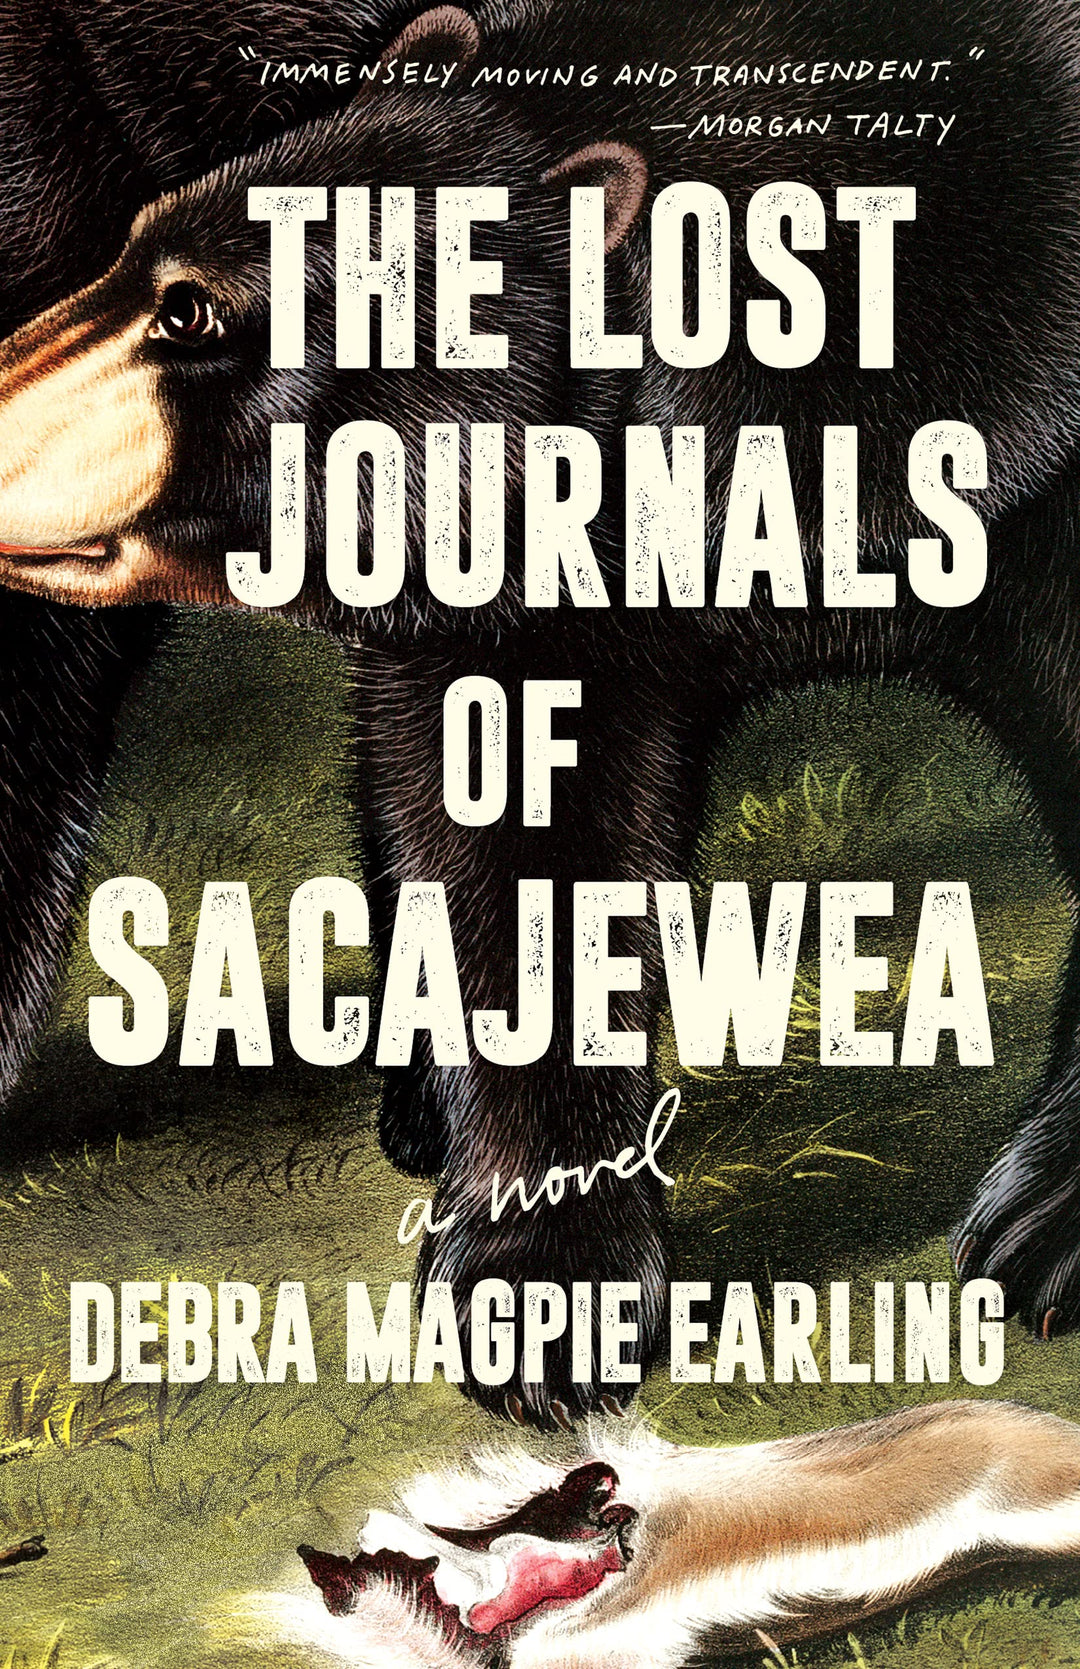 The Lost Journals of Sacajewea by Debra Magpie Earling